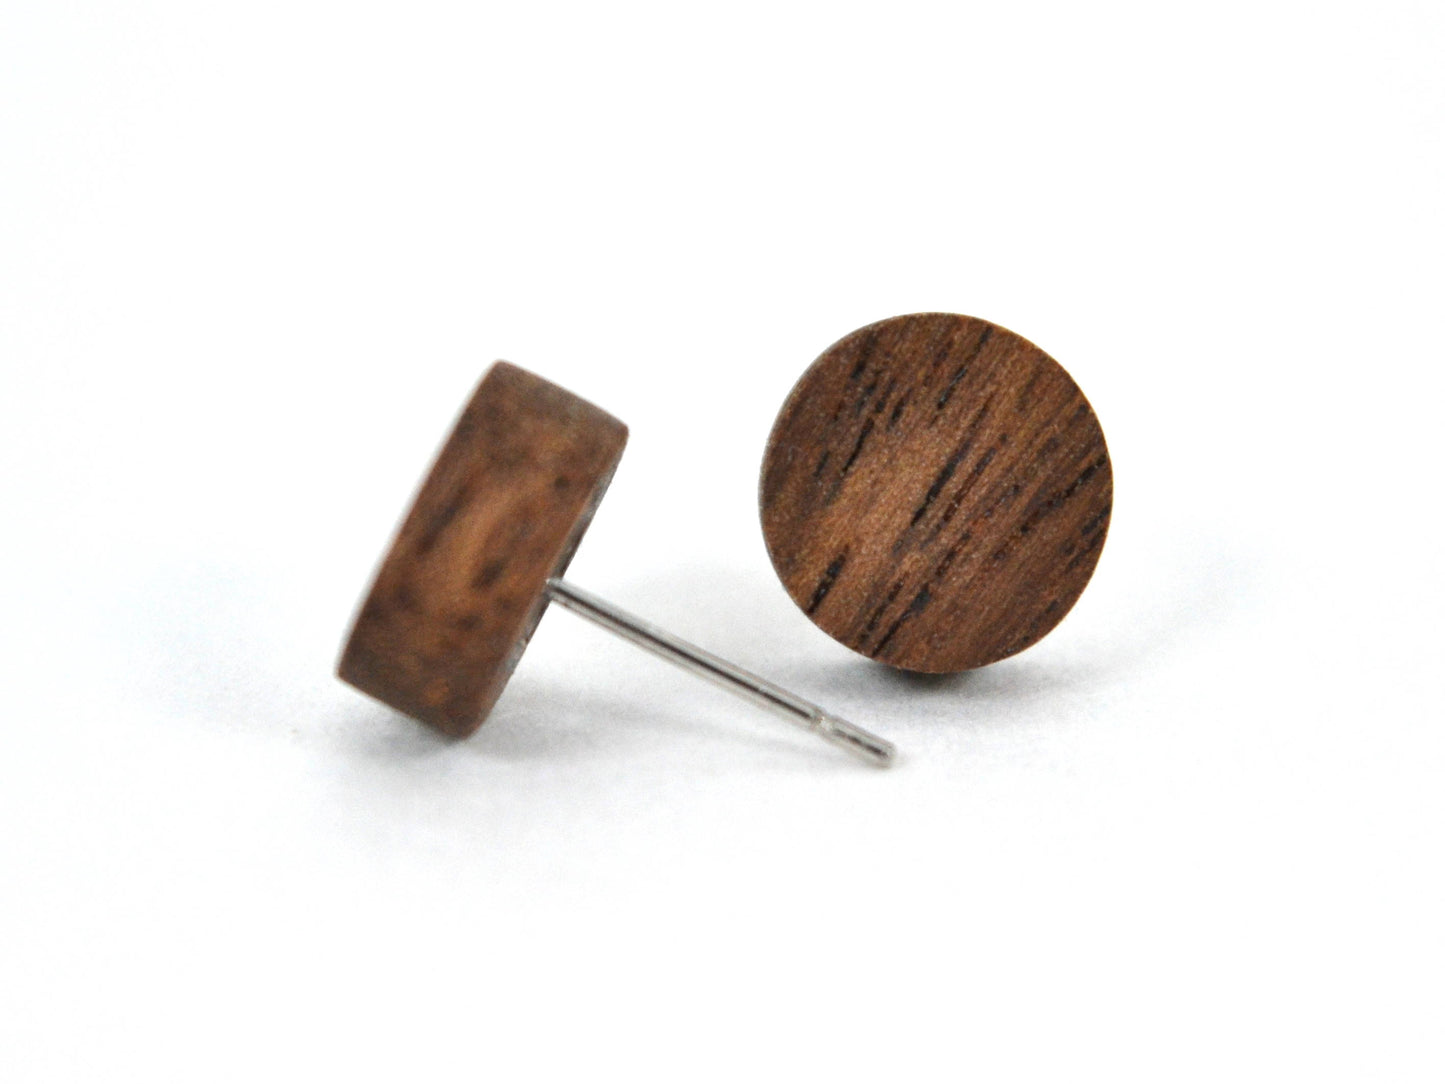 monkeypod wood earring studs, pair of earrings